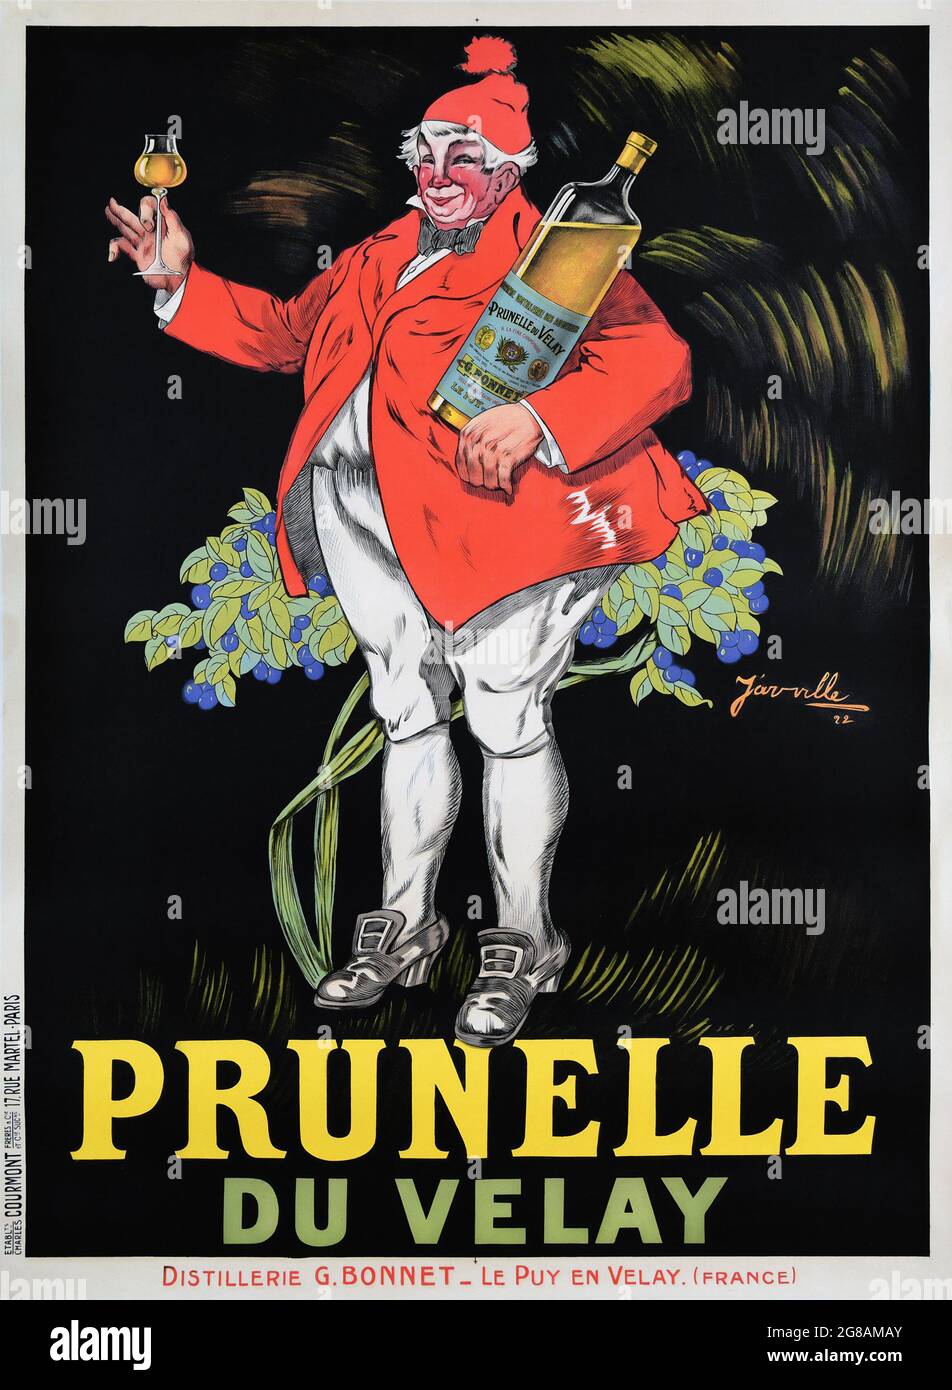 Vintage advertisement for alcohol. Prunelle du Velay. Author: Jarville. Distillerie G. Bonnet. French poster, 1922. Man holding a Prunelle bottle. Stock Photo